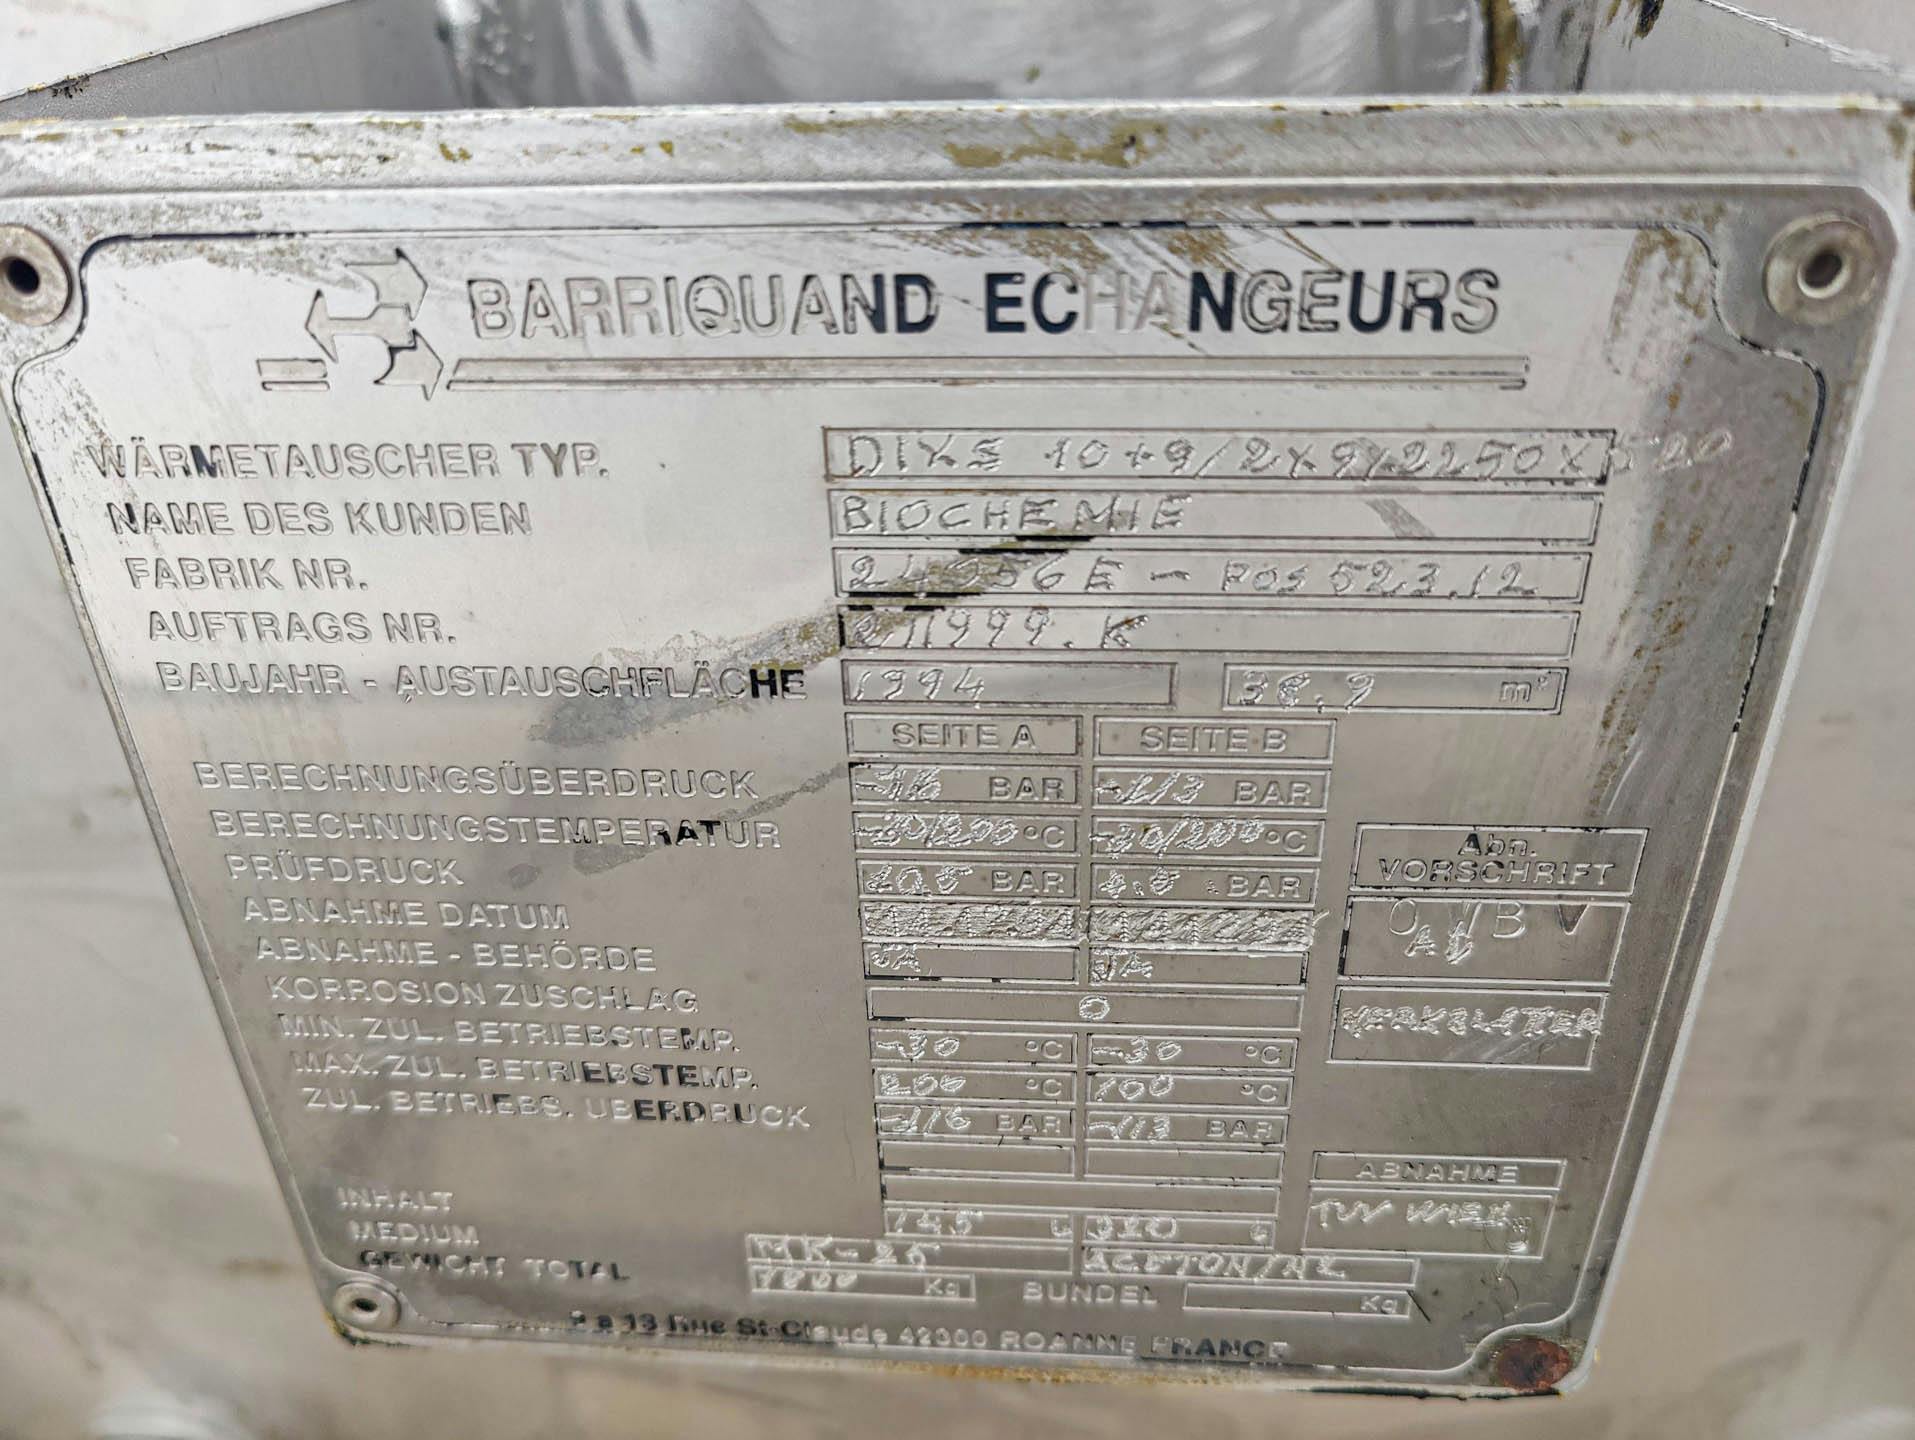 Barriquand Platular DIXS condensor - Permutador de calor de placas - image 8